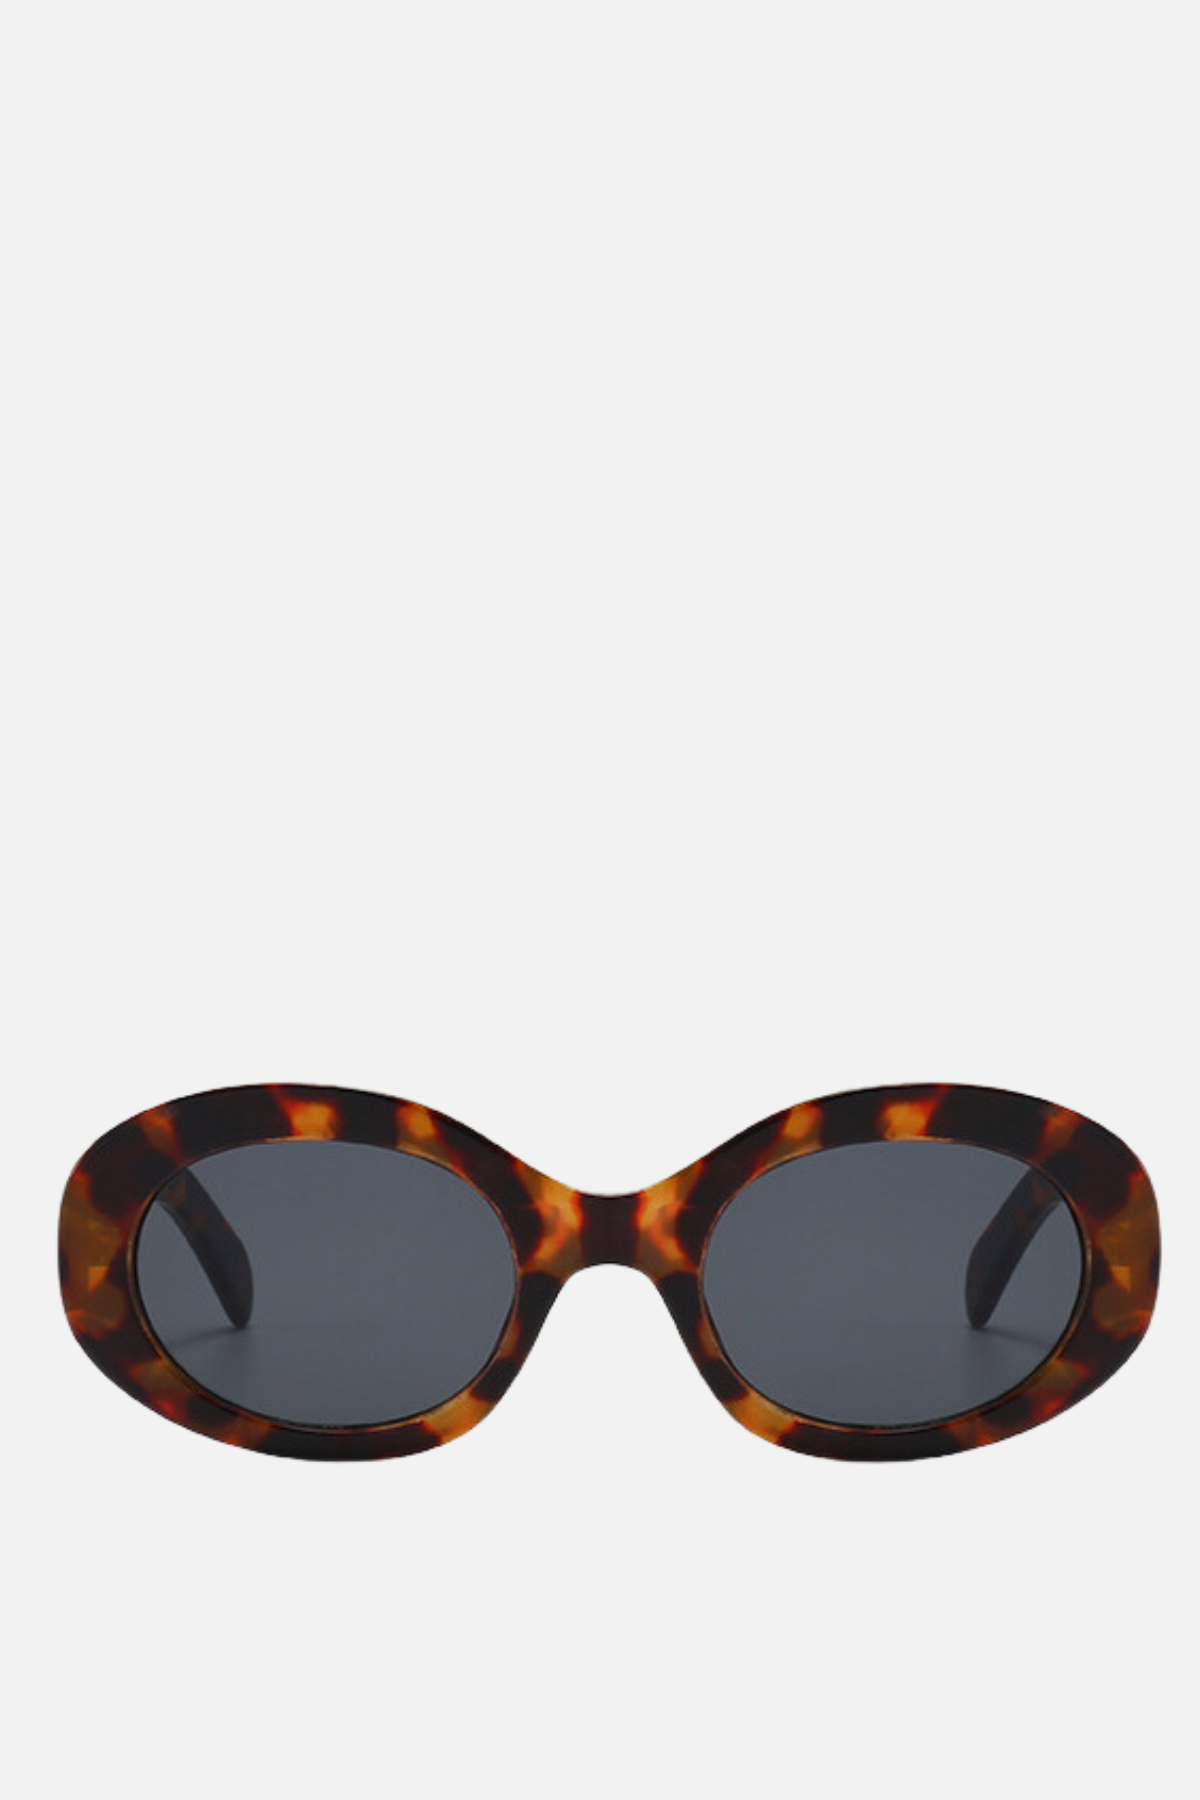 LIMA Leopard Round Sunglasses